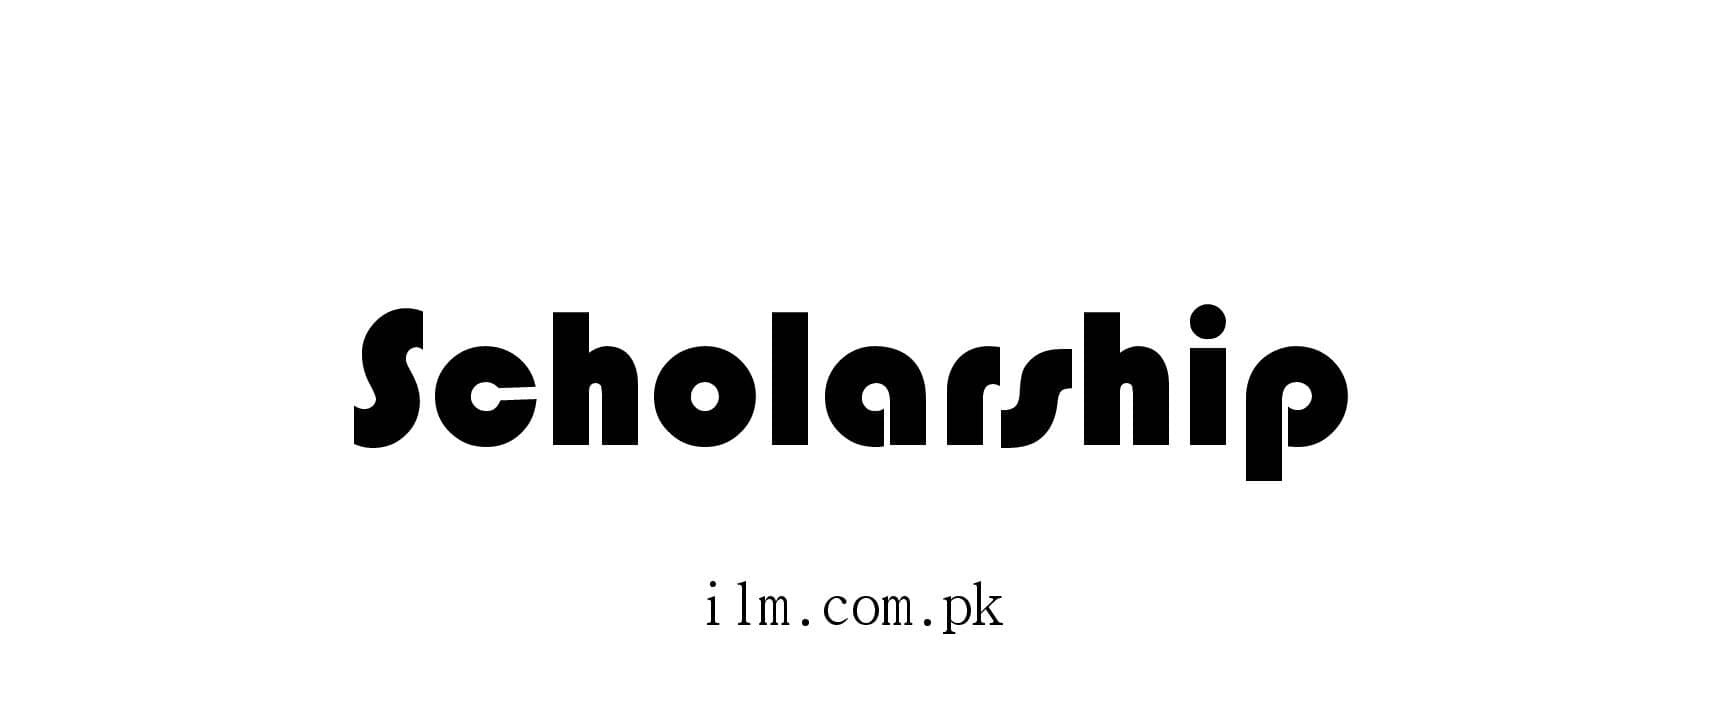 Turkey Scholarship 2021 For Pakistani Students Apply Online